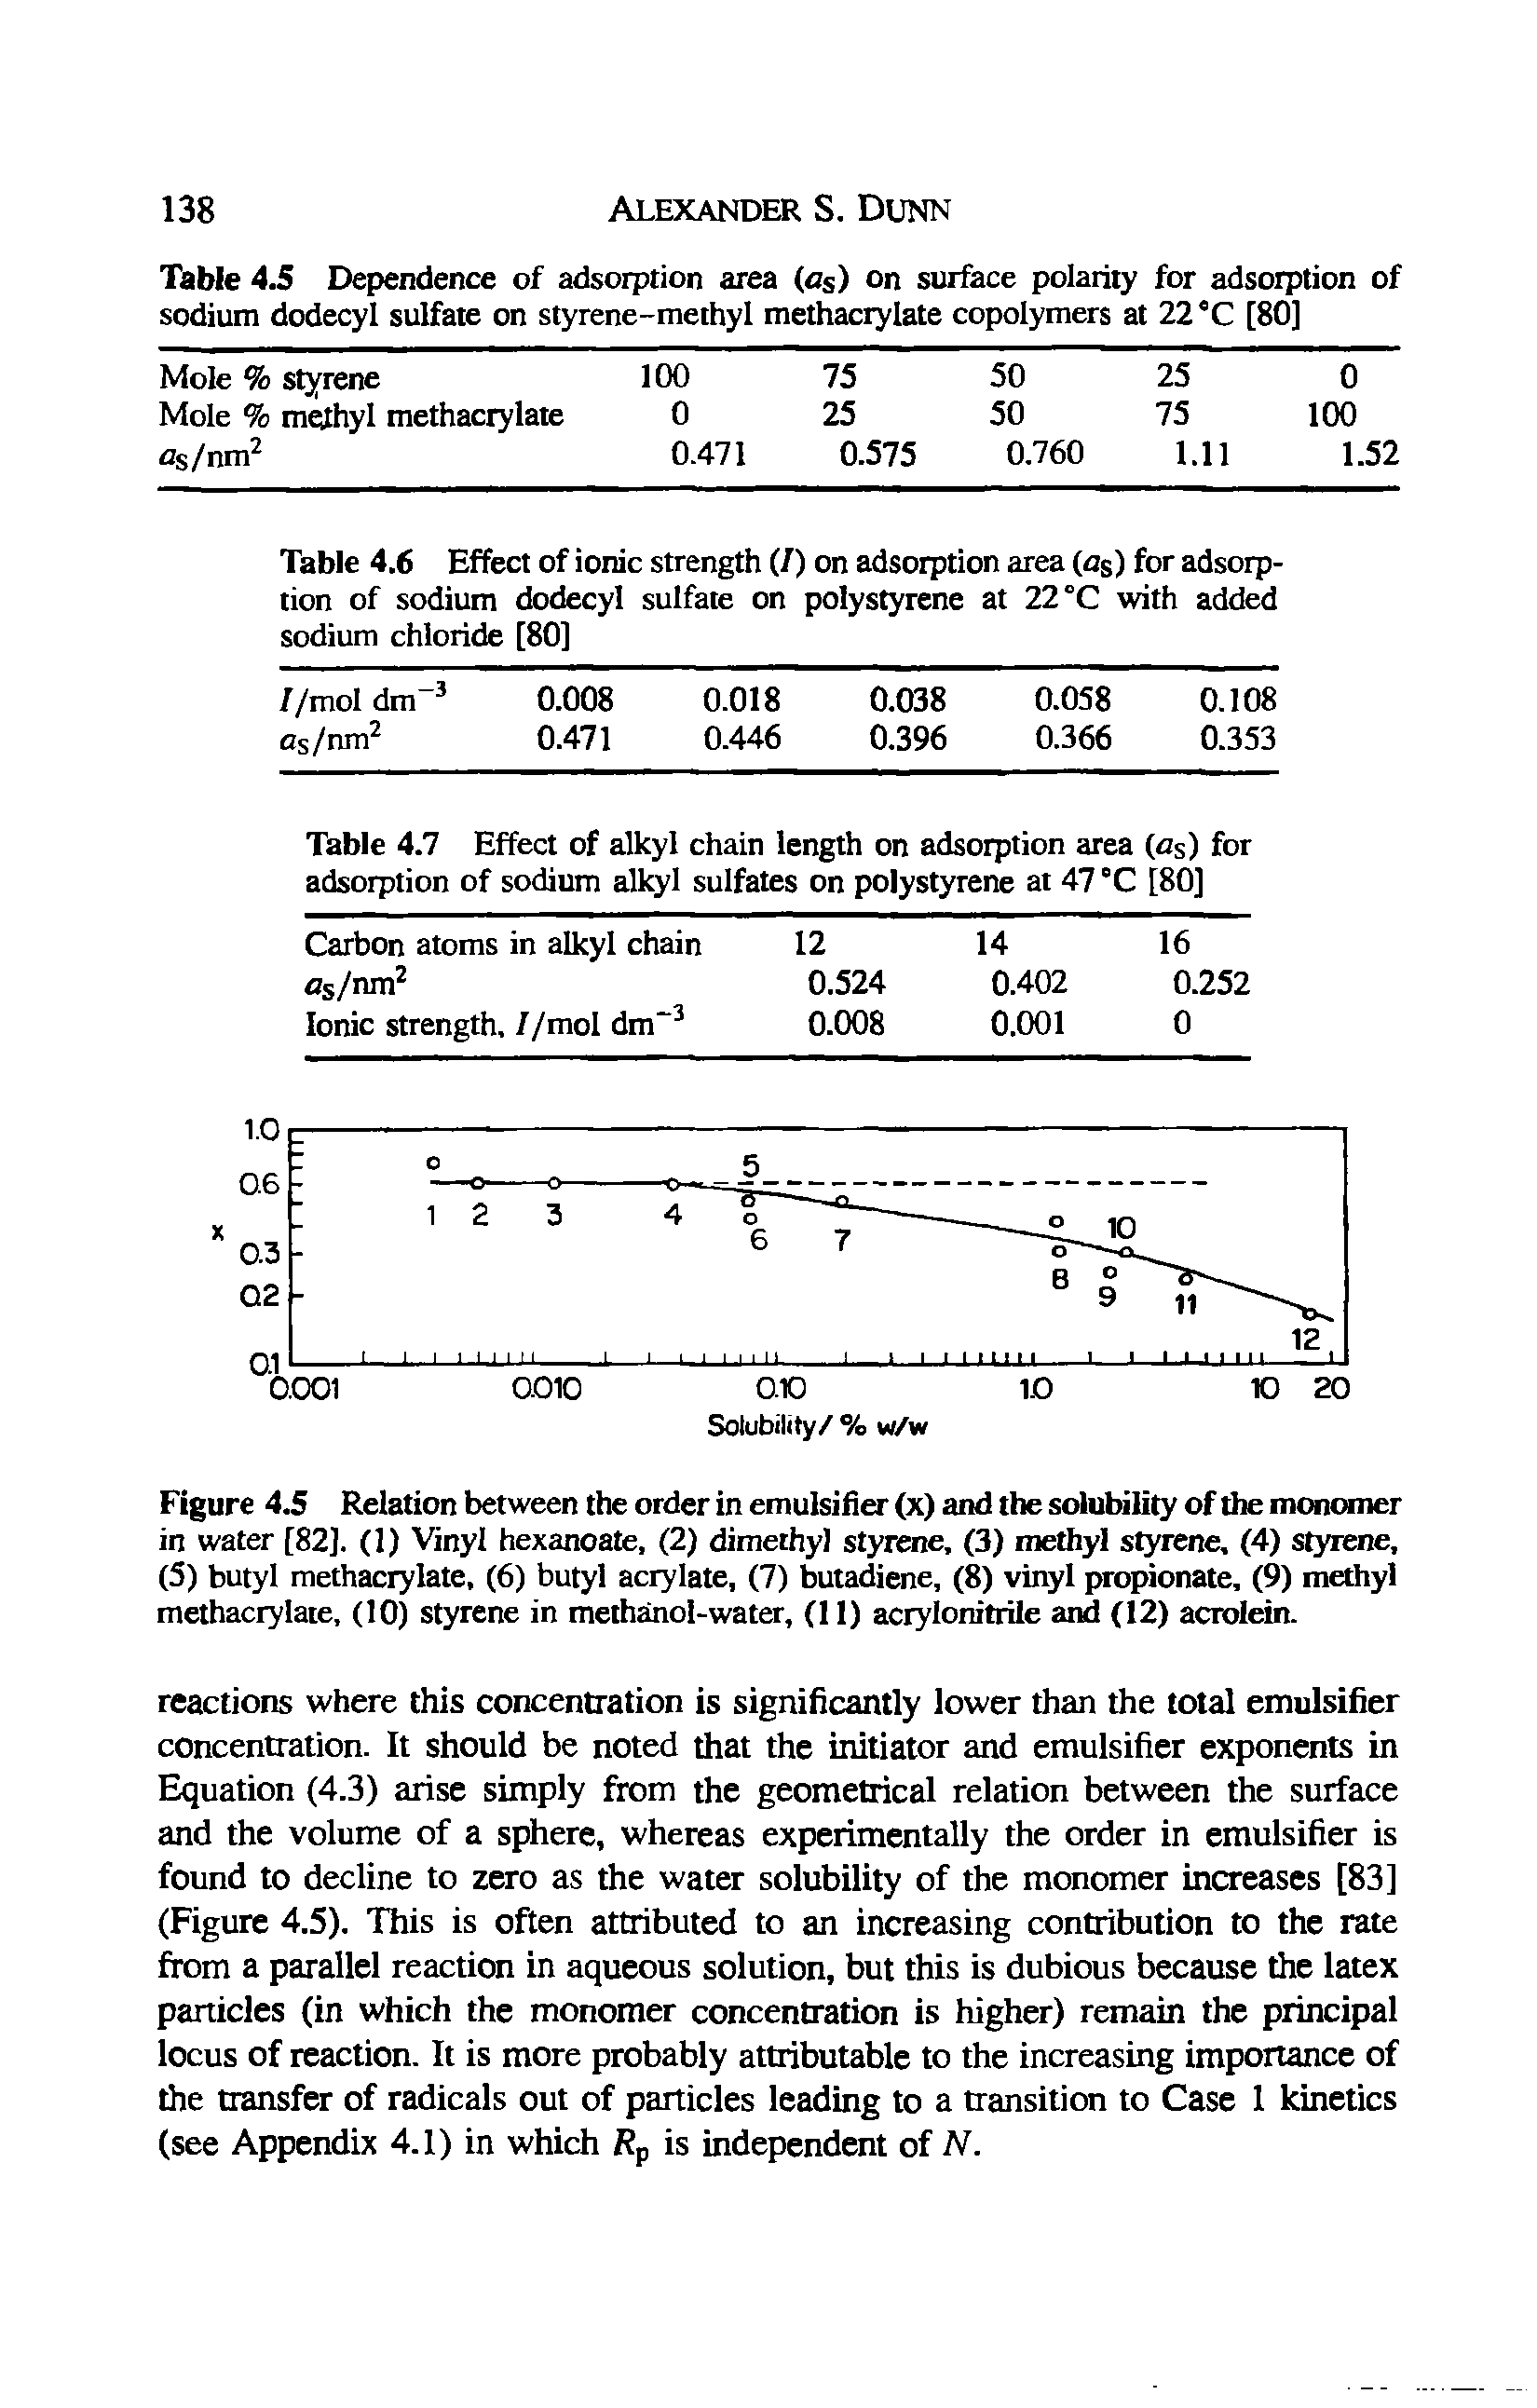 Figure 4.5 Relation between the order in emulsifier (x) and the solubility of the monomer in water [82]. (1) Vinyl hexanoate, (2) dimethyl styrene, (3) methyl styrene, (4) styrene, (5) butyl methacrylate, (6) butyl acrylate, (7) butadiene, (8) vinyl propionate, (9) methyl methacrylate, (10) styrene in methanol-water, (11) acrylonitrile and (12) acrolein.